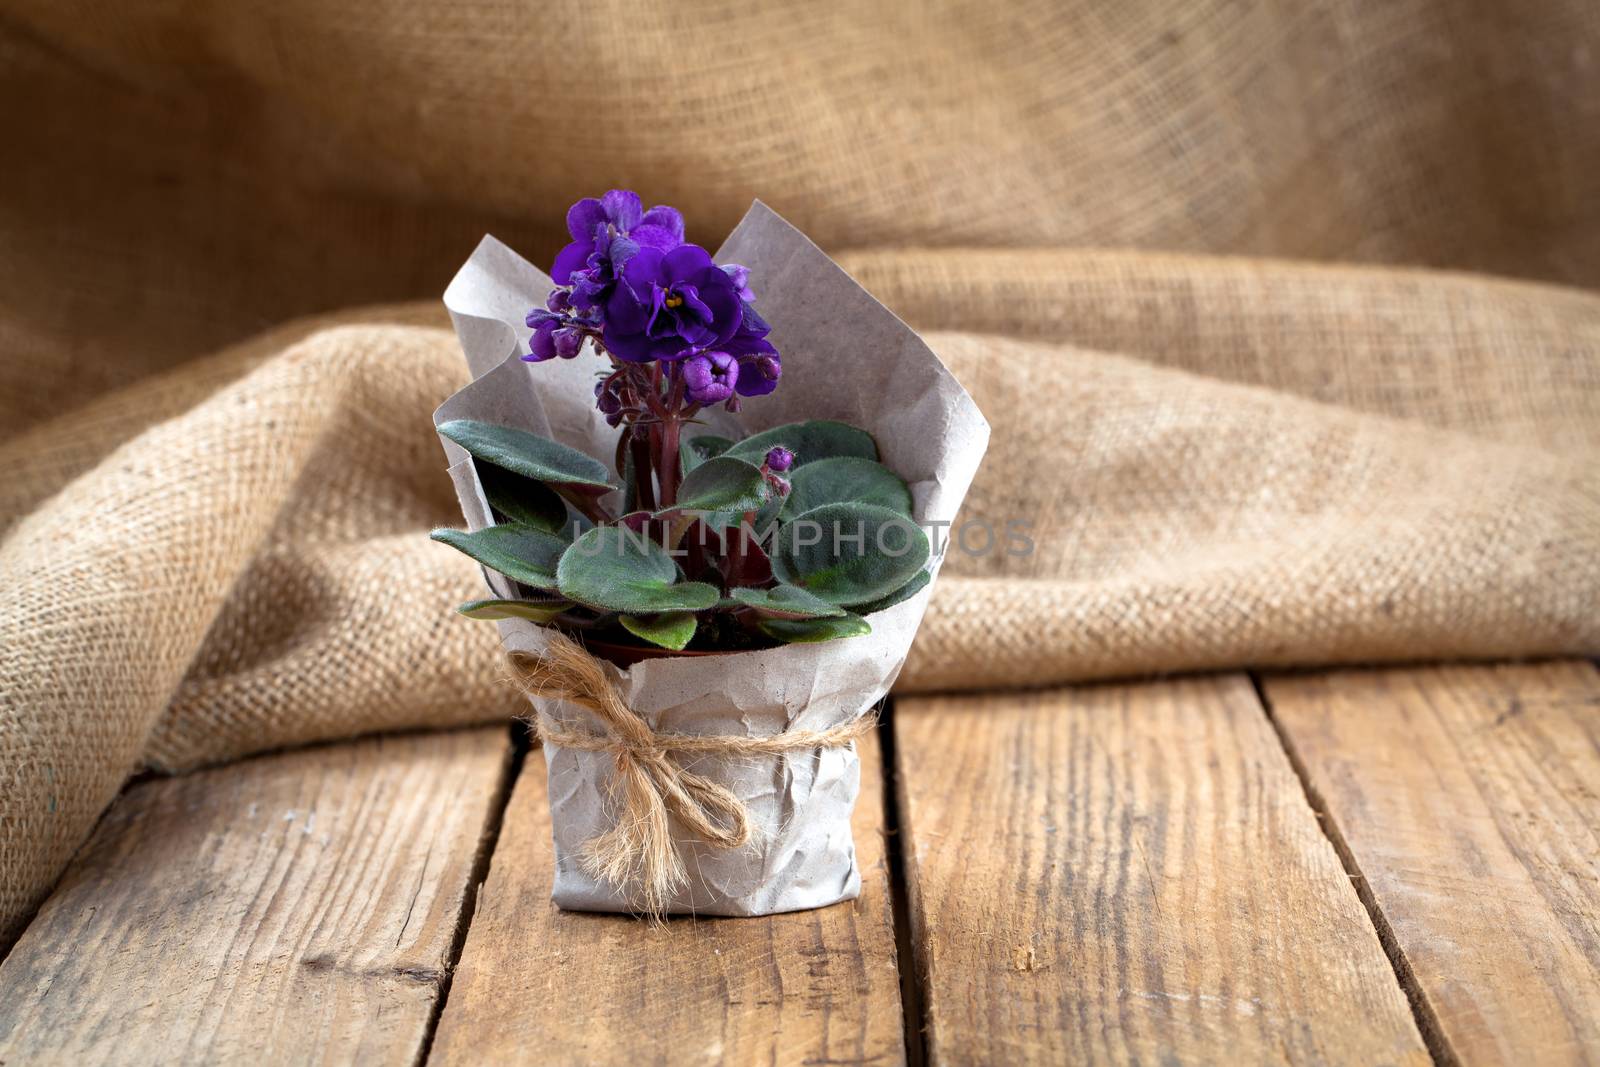 Saintpaulias flowers in paper packaging, on sackcloth, wooden background